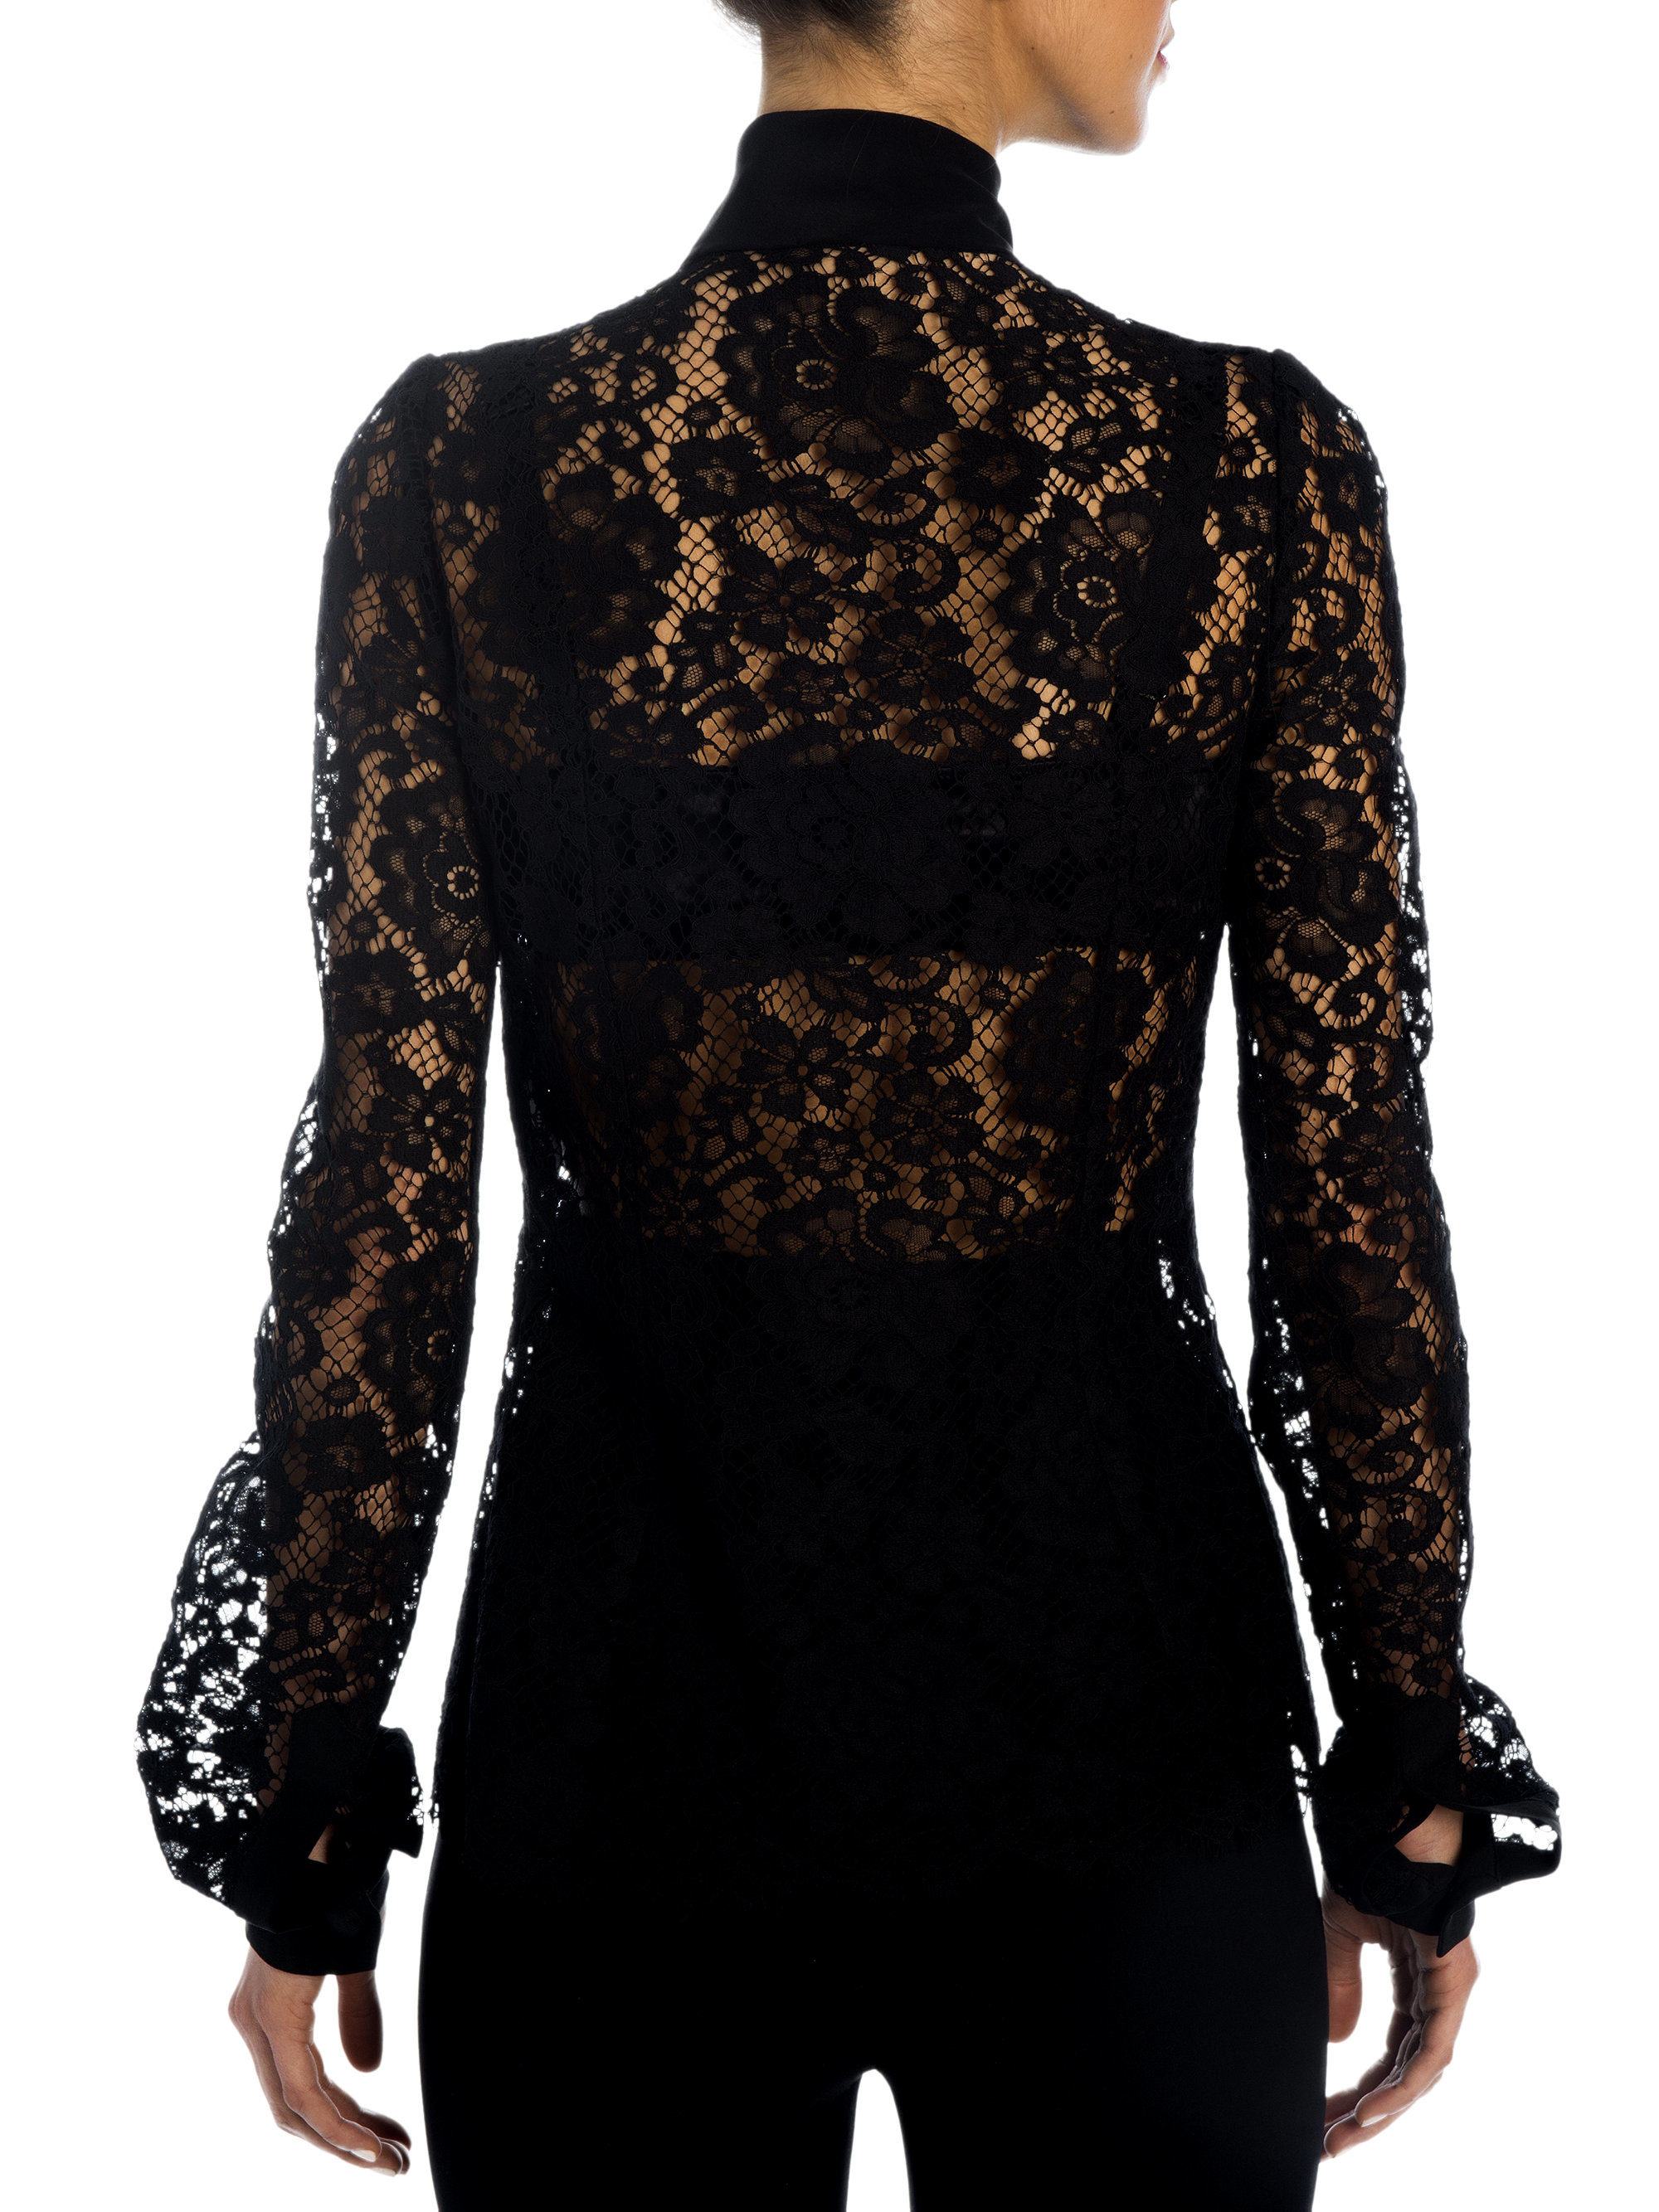 Lyst - Dolce & Gabbana Lace Tie-neck Blouse in Black